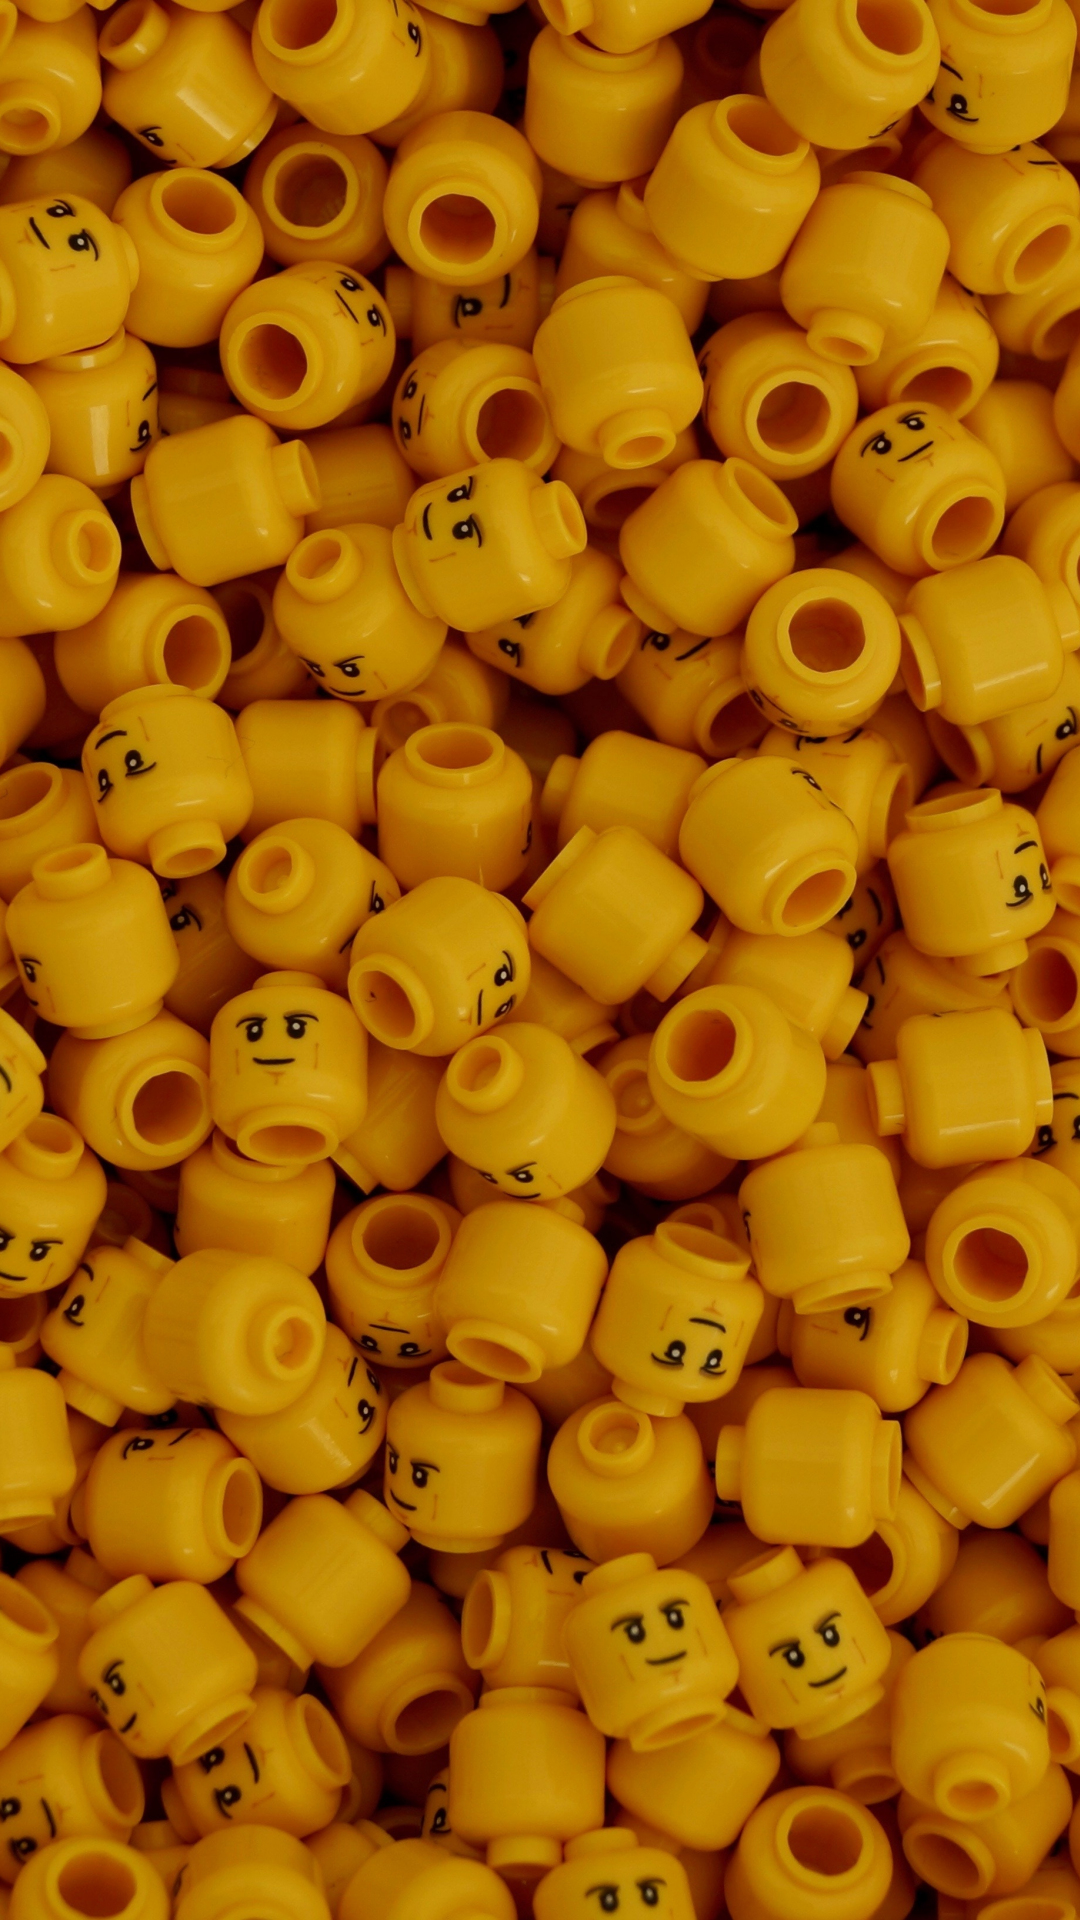 Yellow, Lego, toy, 1080x1920 wallpaper